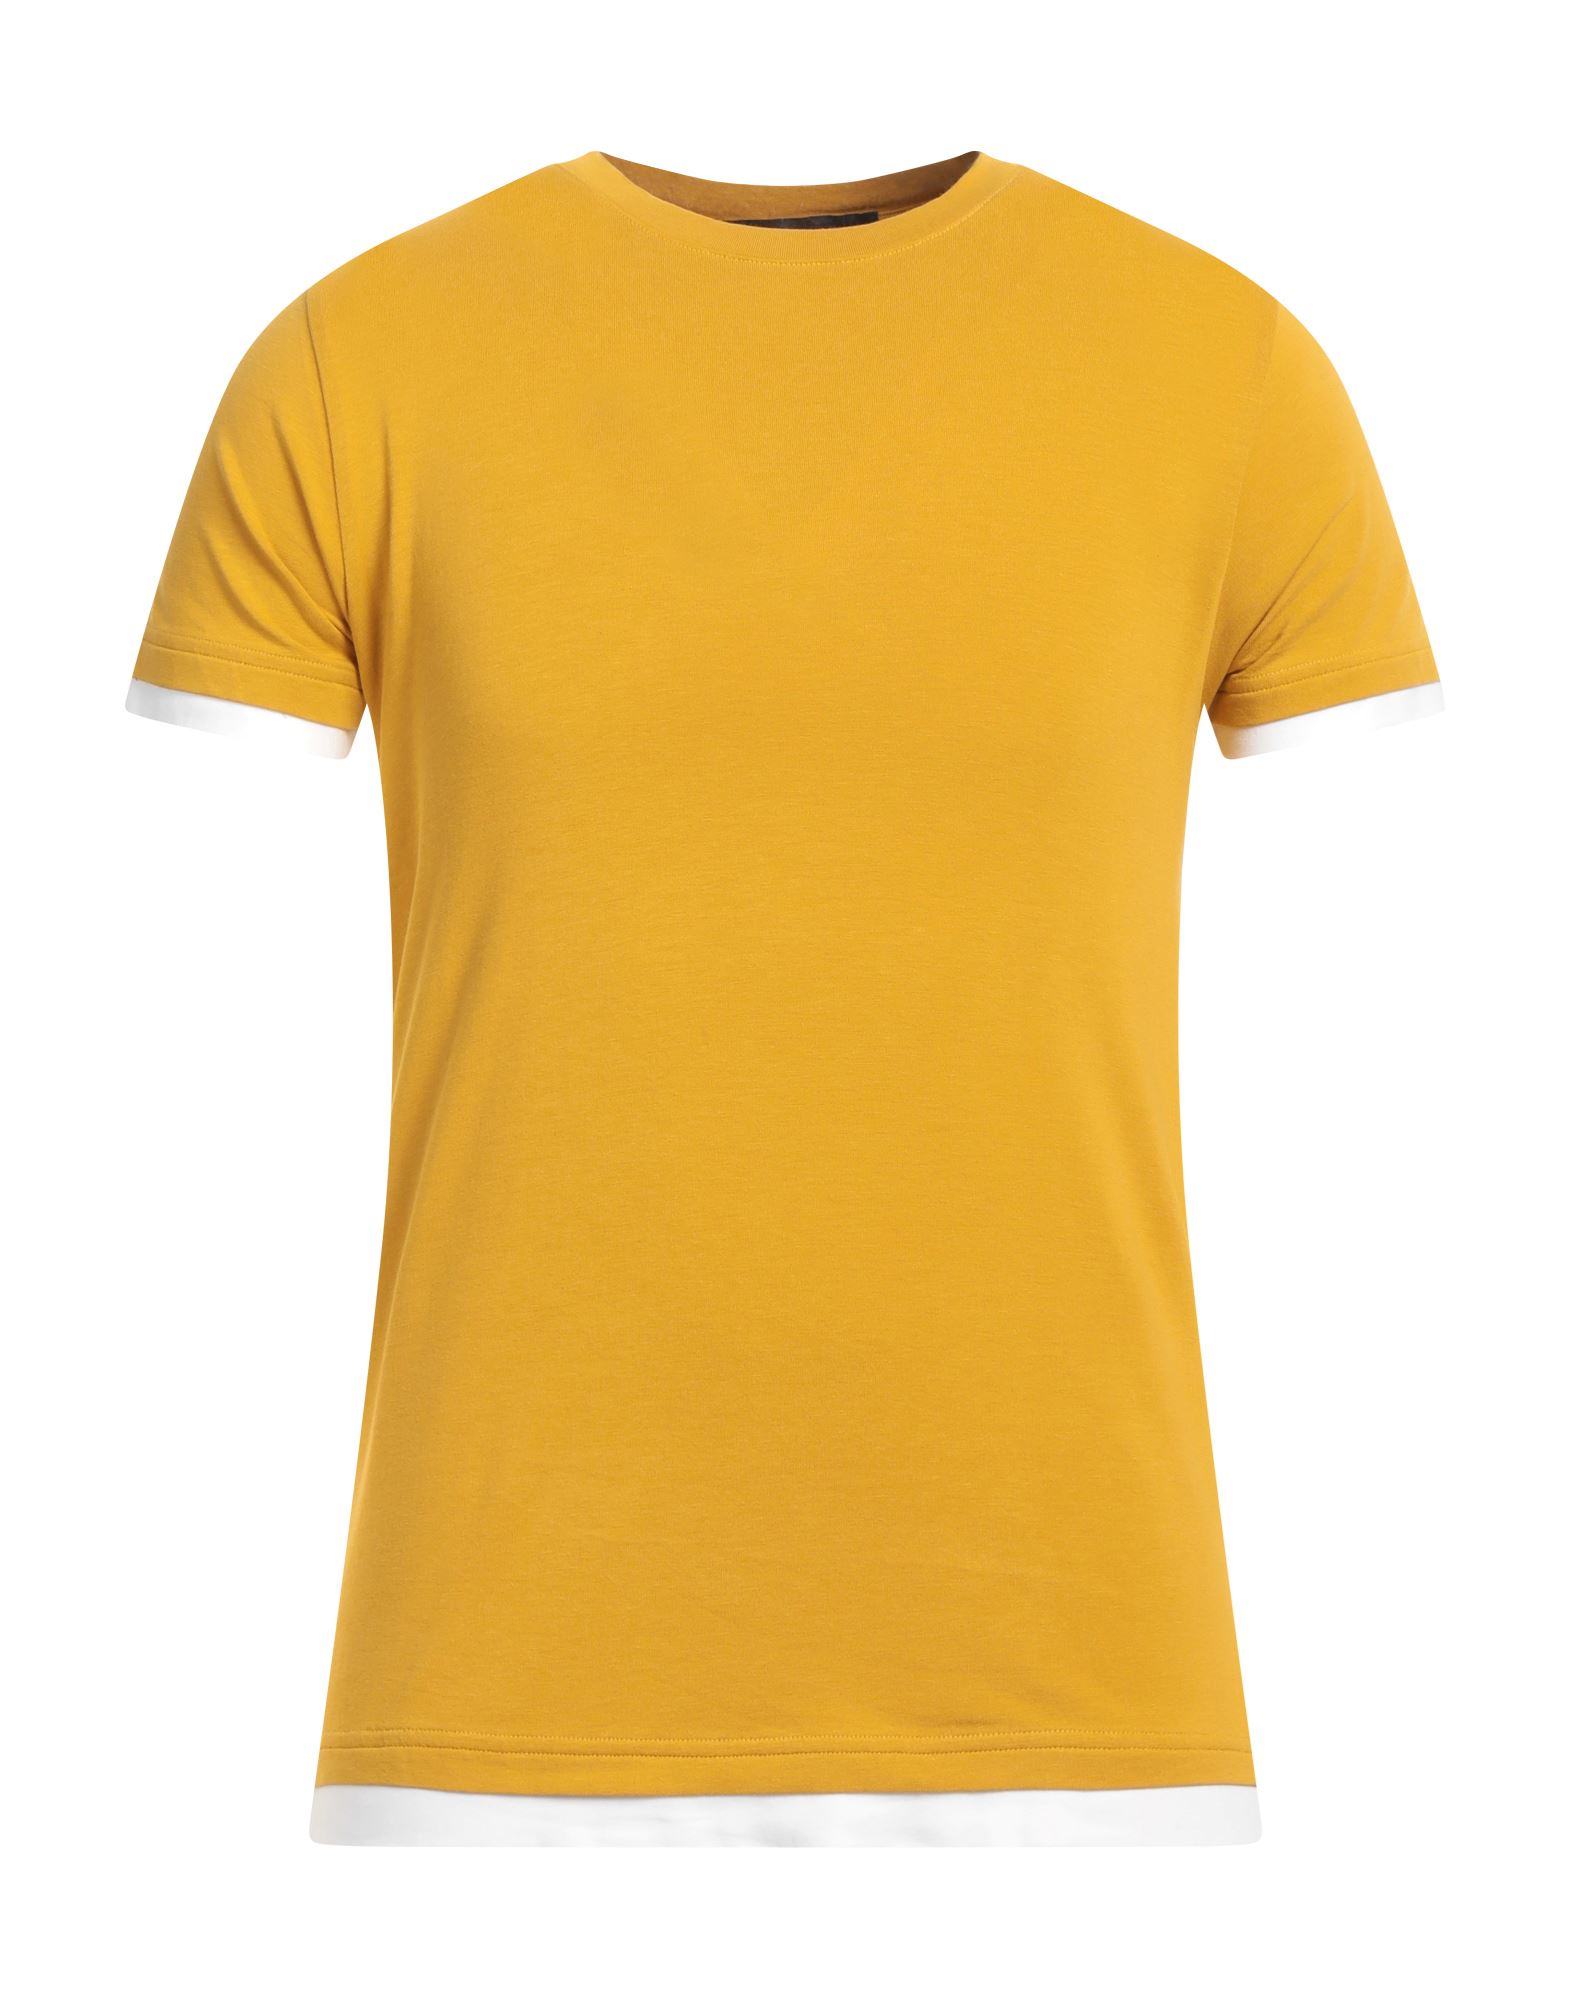 Jeordie's Man T-shirt Mustard Size Xxl Cotton, Elastane In Yellow